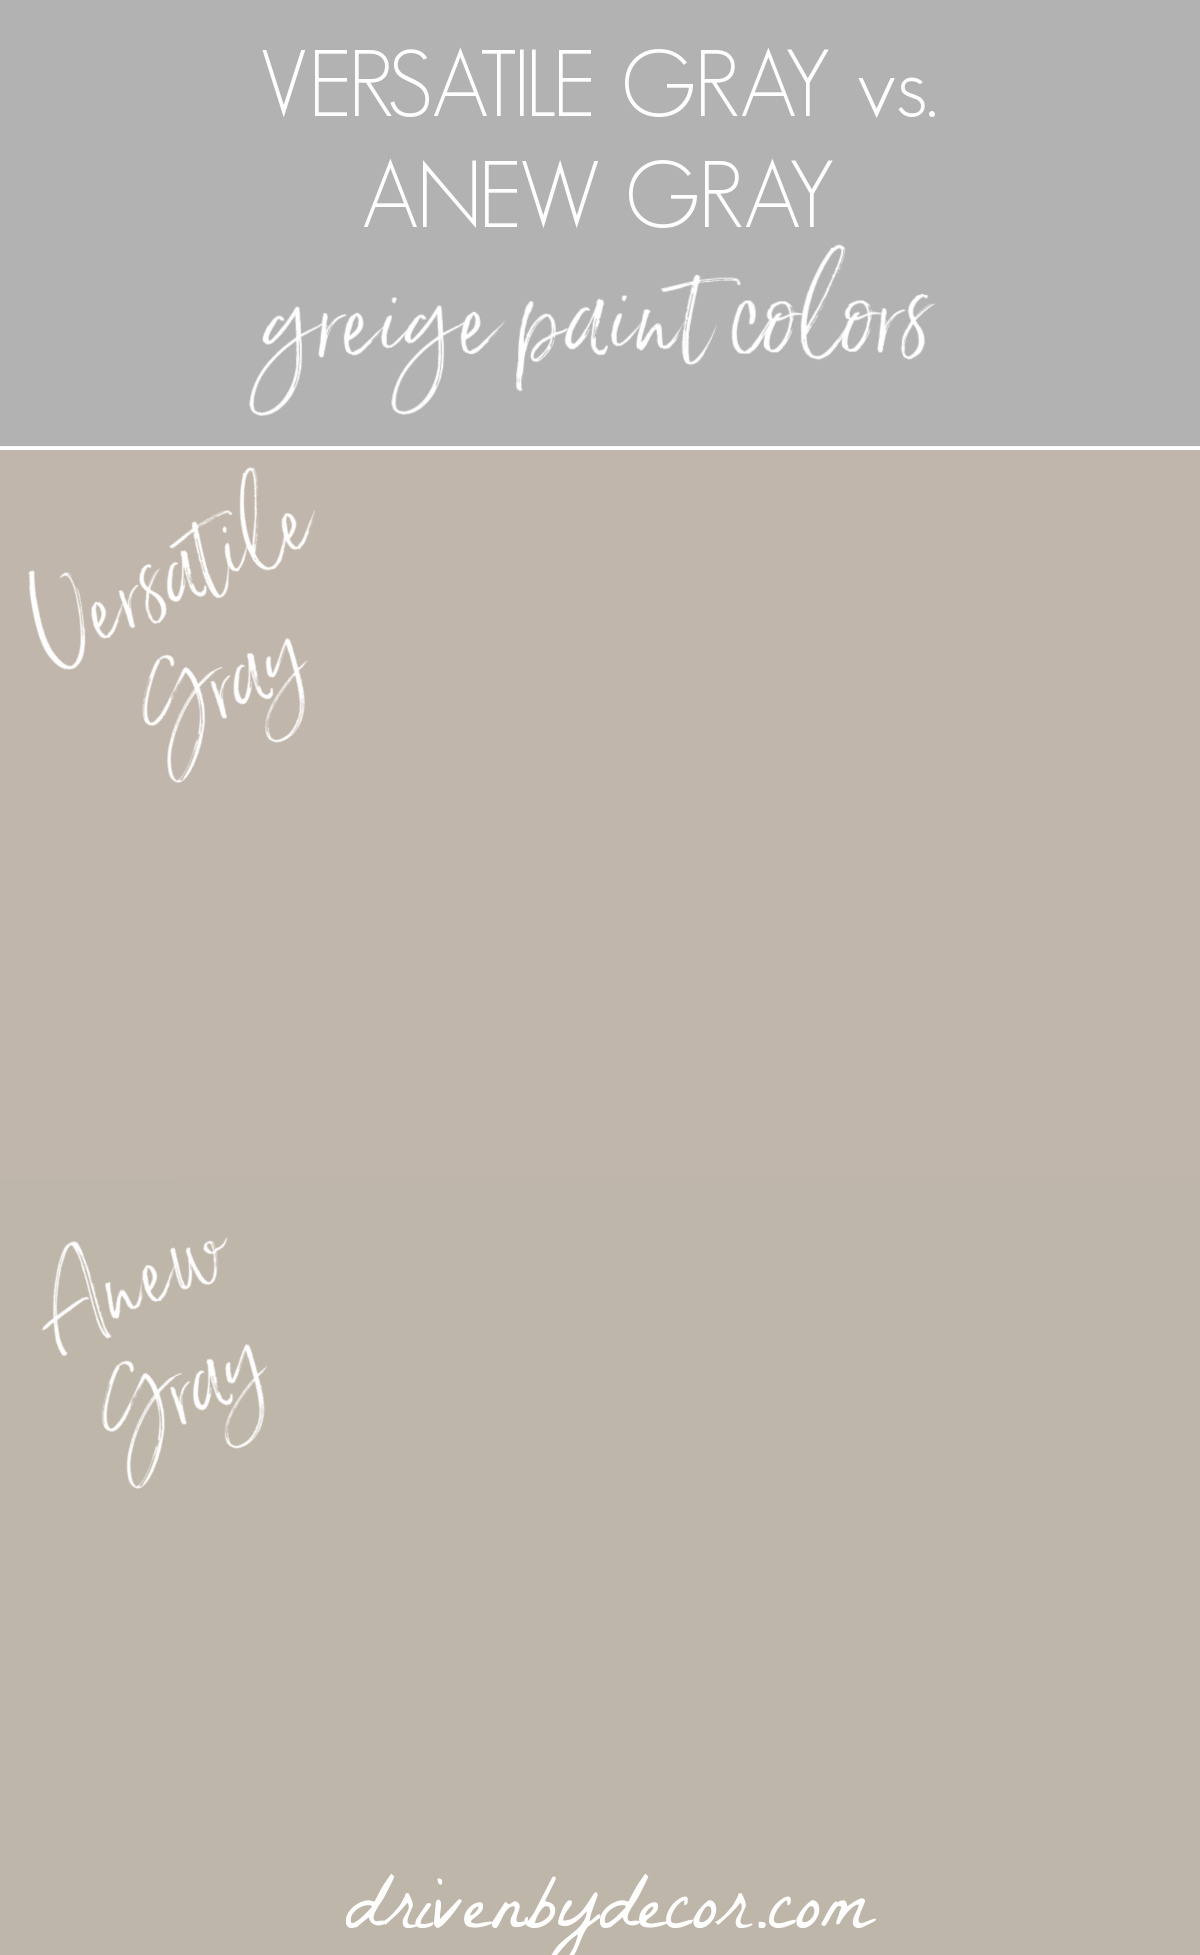 Versatile Gray vs. Anew Gray greige paint colors